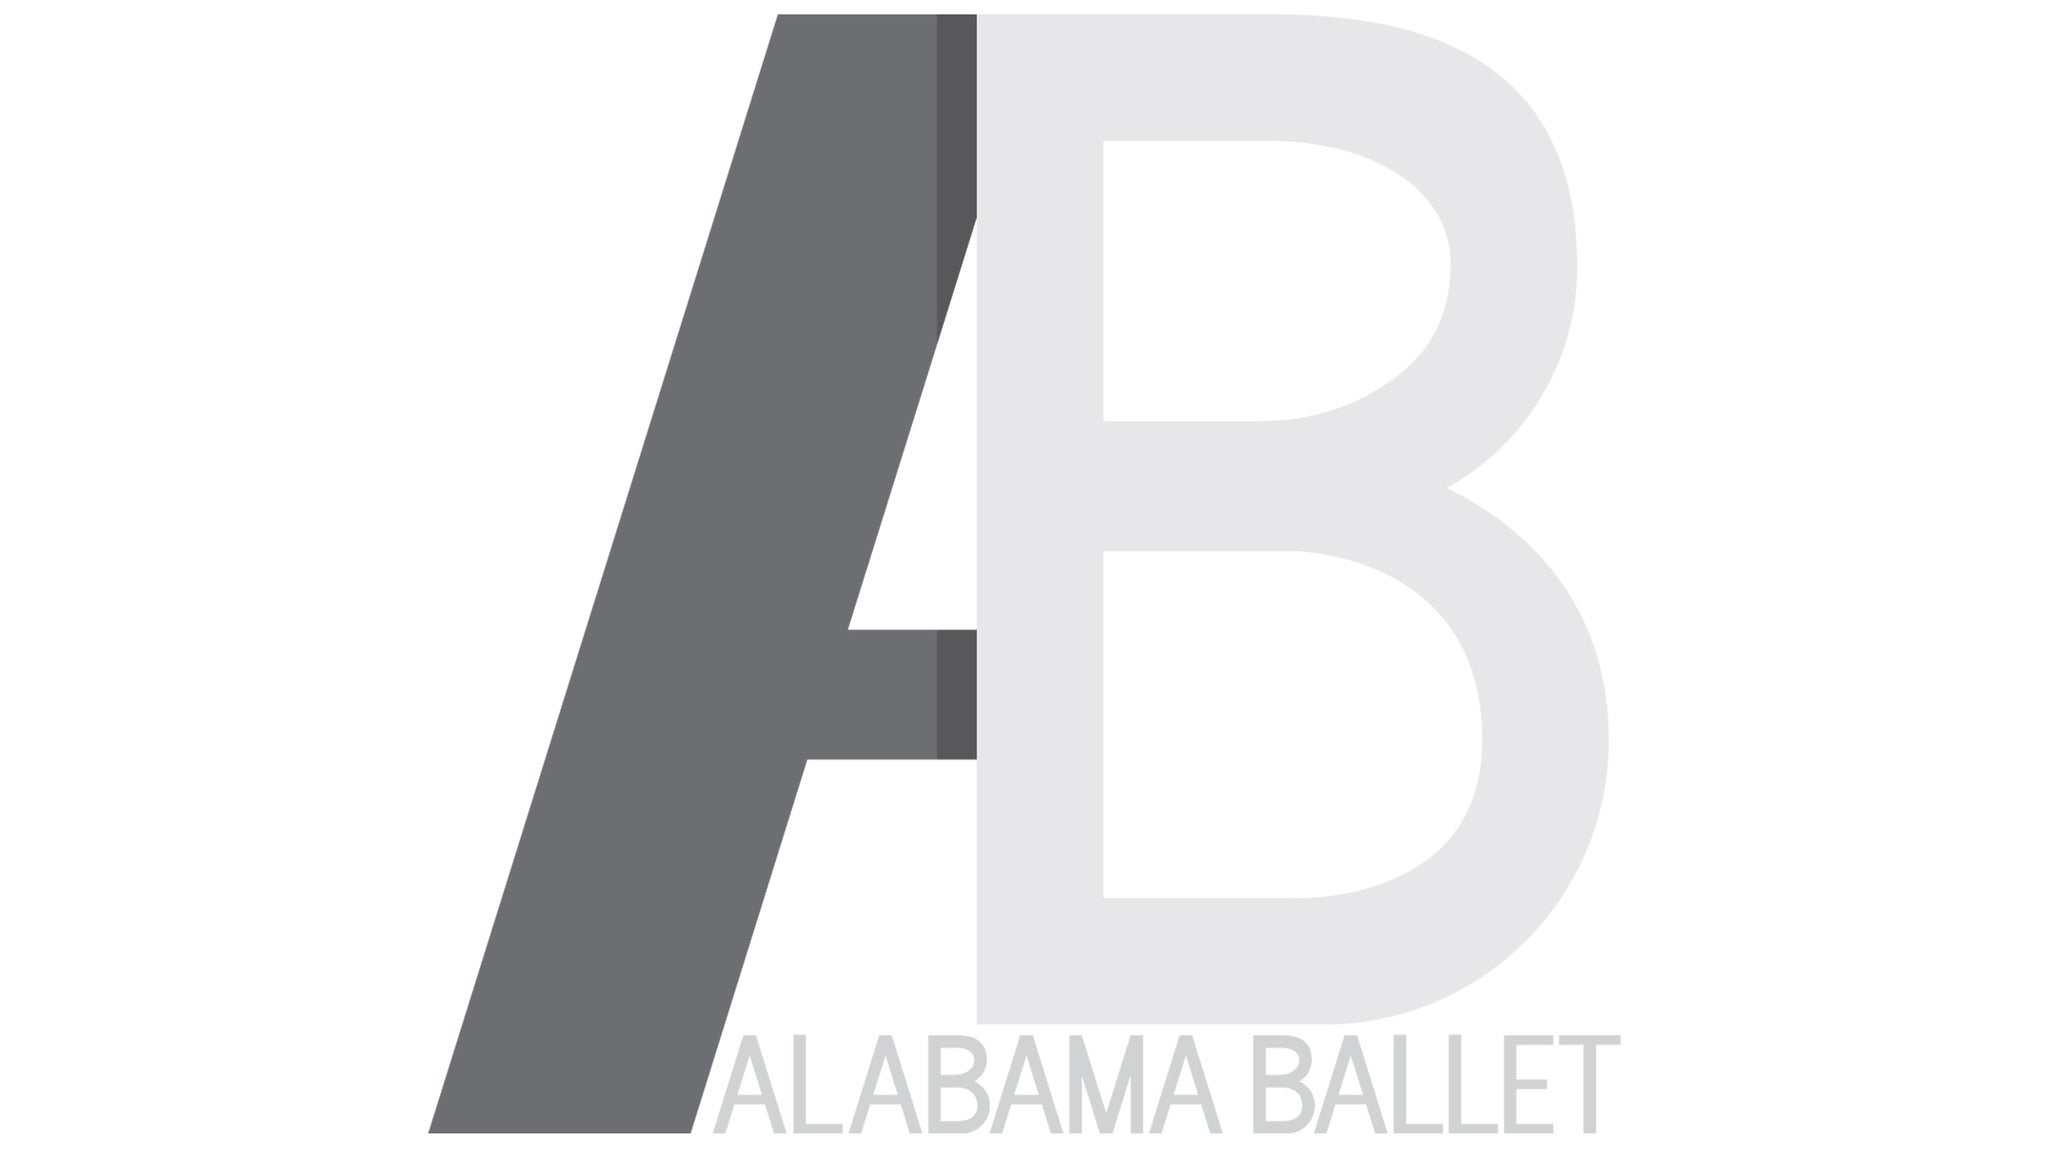 Alabama Ballet Presents George Balanchine's The Nutcracker® - Birmingham, AL 35203